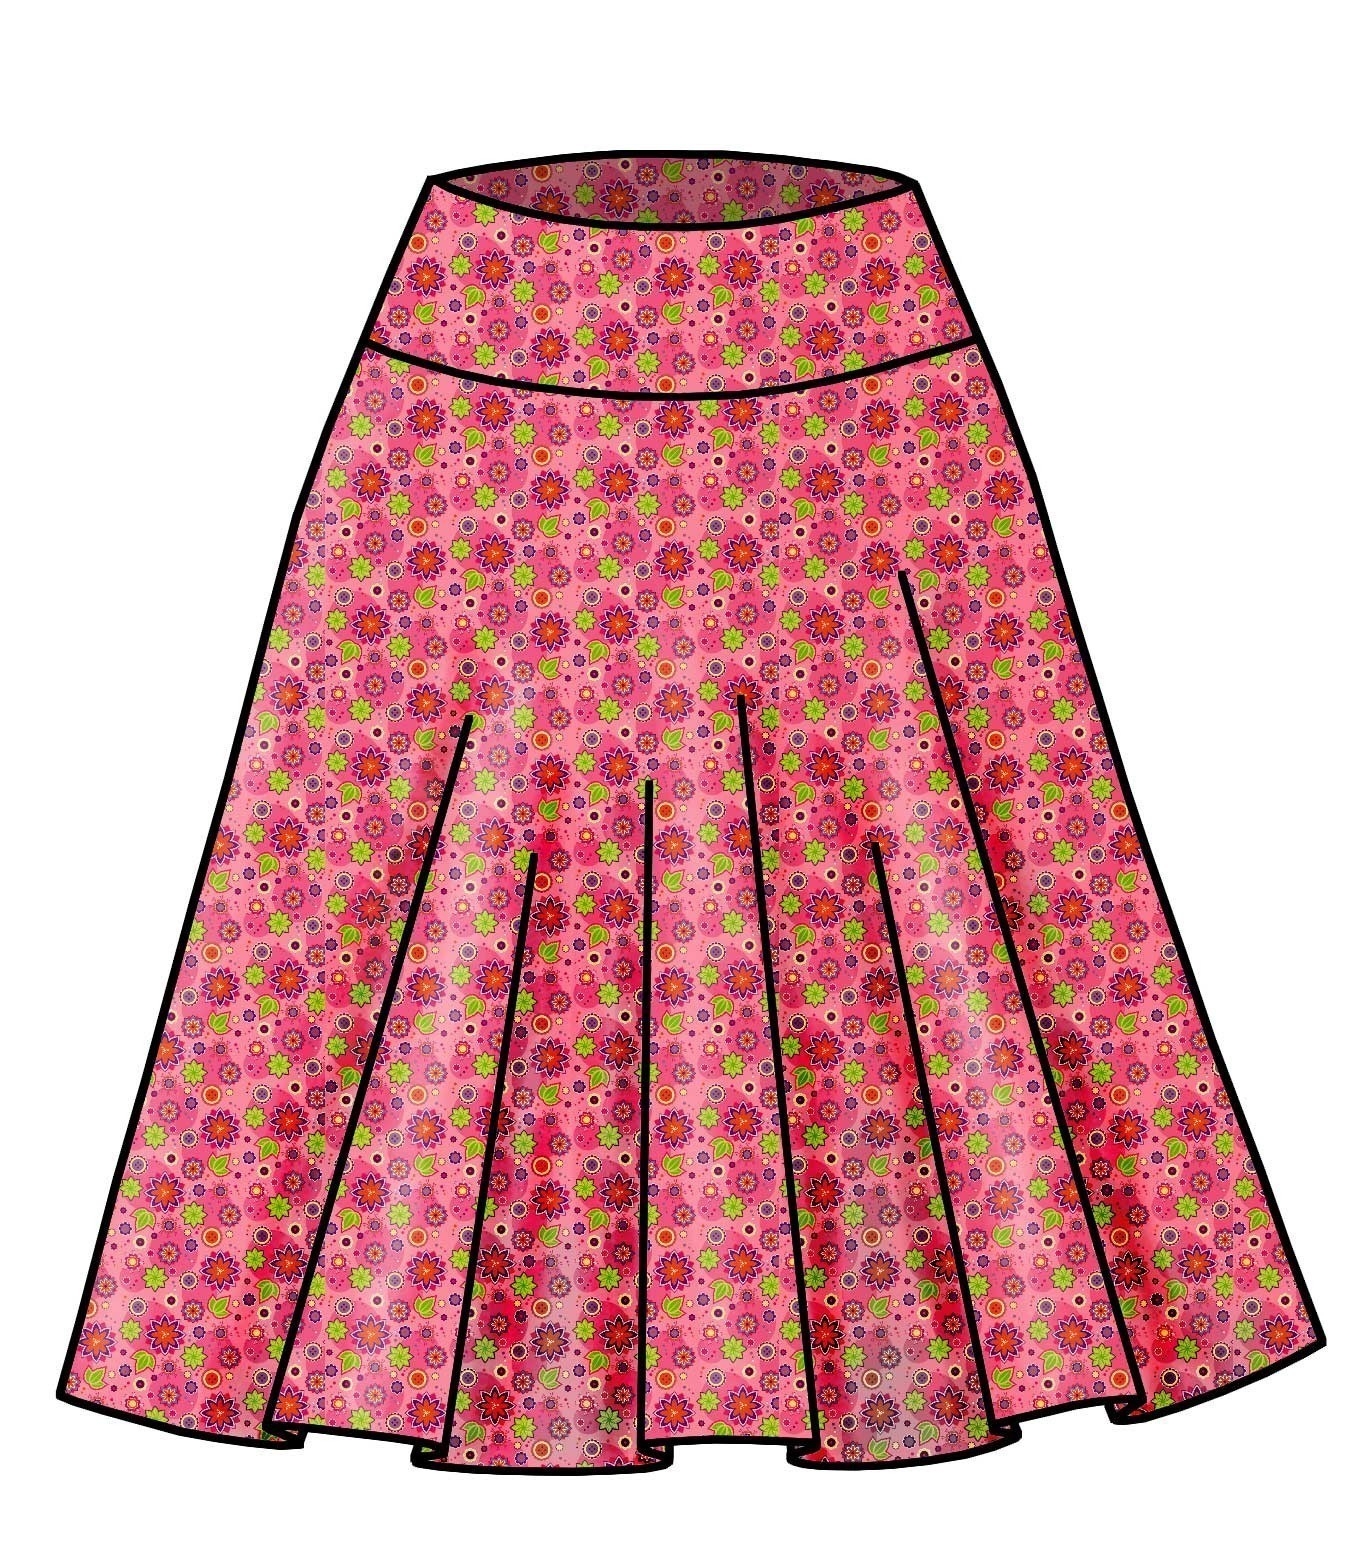 Skirt clipart Unique Skirt Clipart Free Download Clip Art Free Clip.